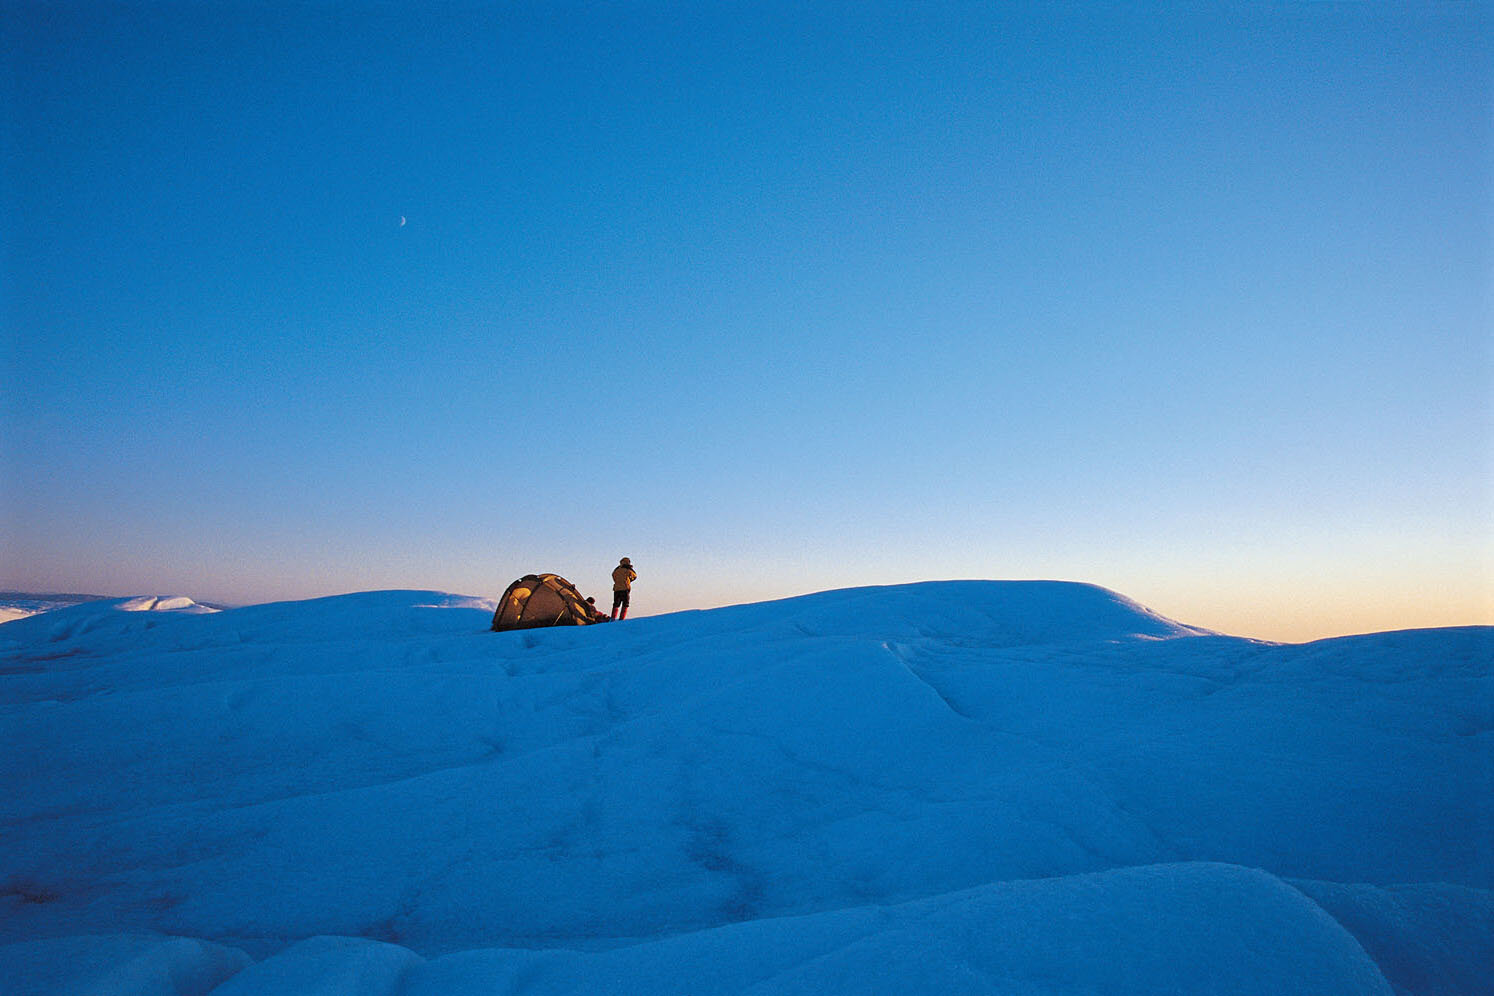 Greenland-Ousland Explorers-fred.jpg